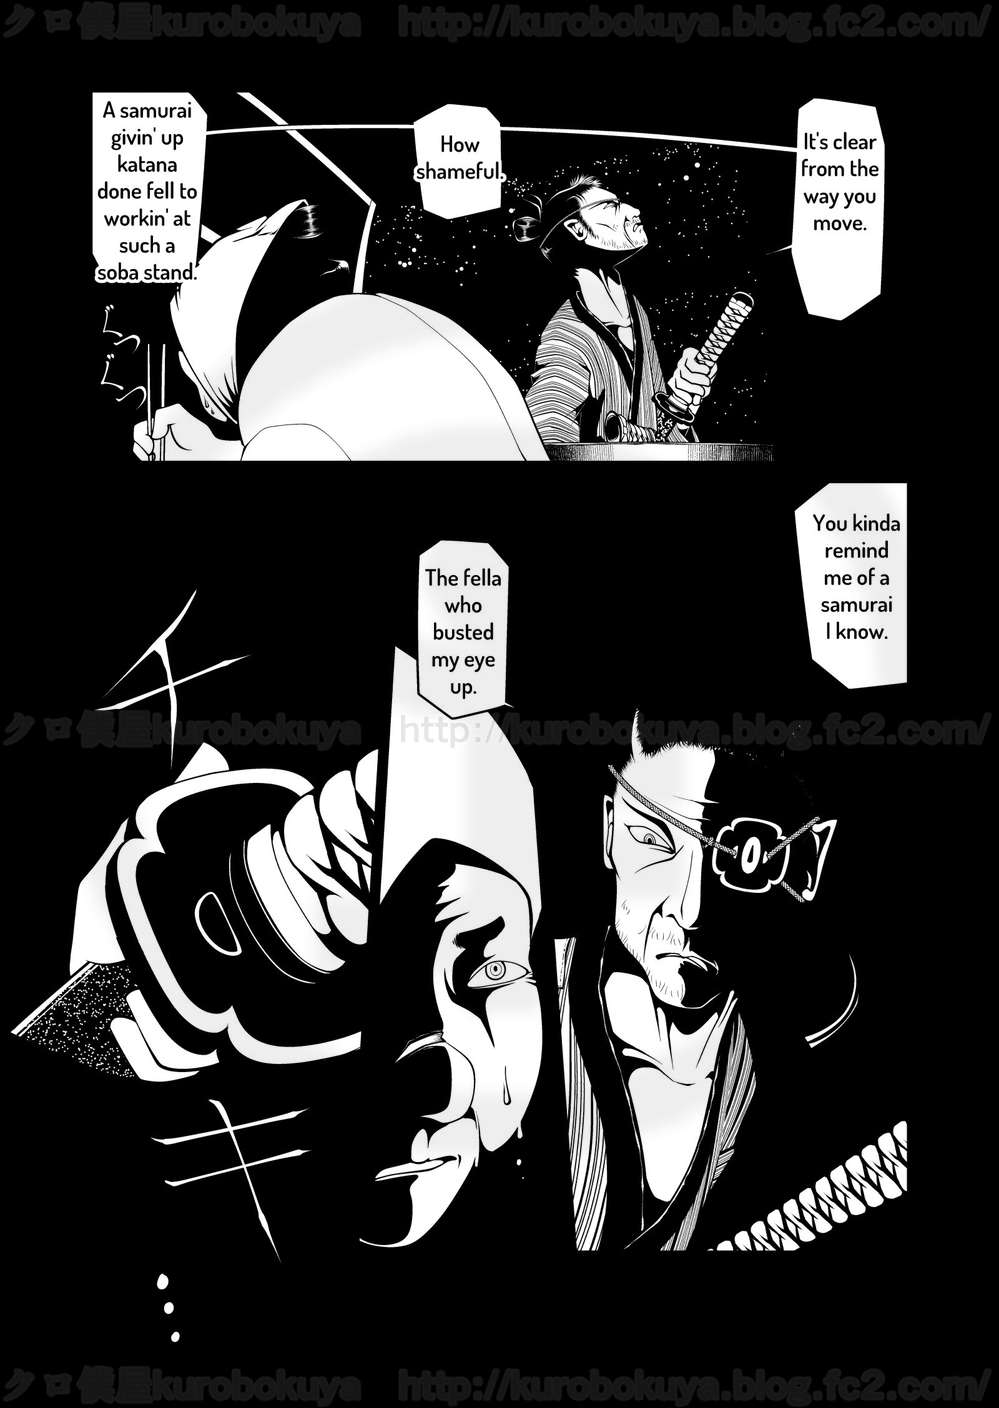 Seventy-seven Nights of Edo: Histrorical Drama Manga Works by kurobokuya